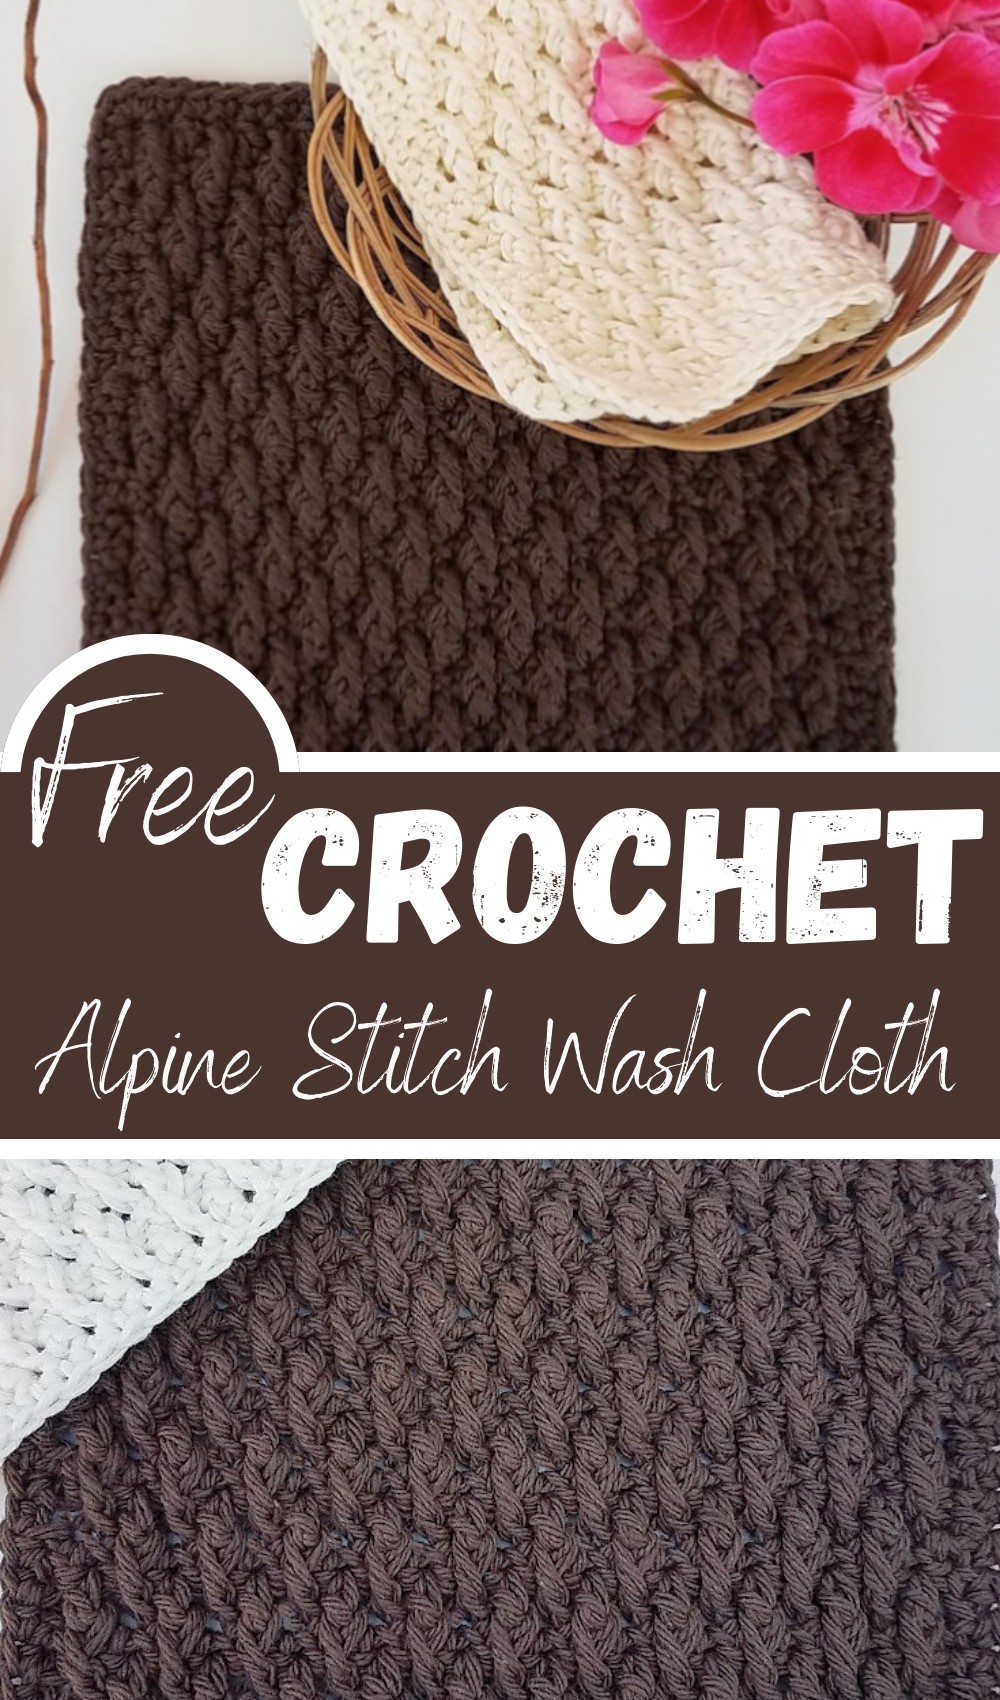 Alpine Stitch Wash Cloth